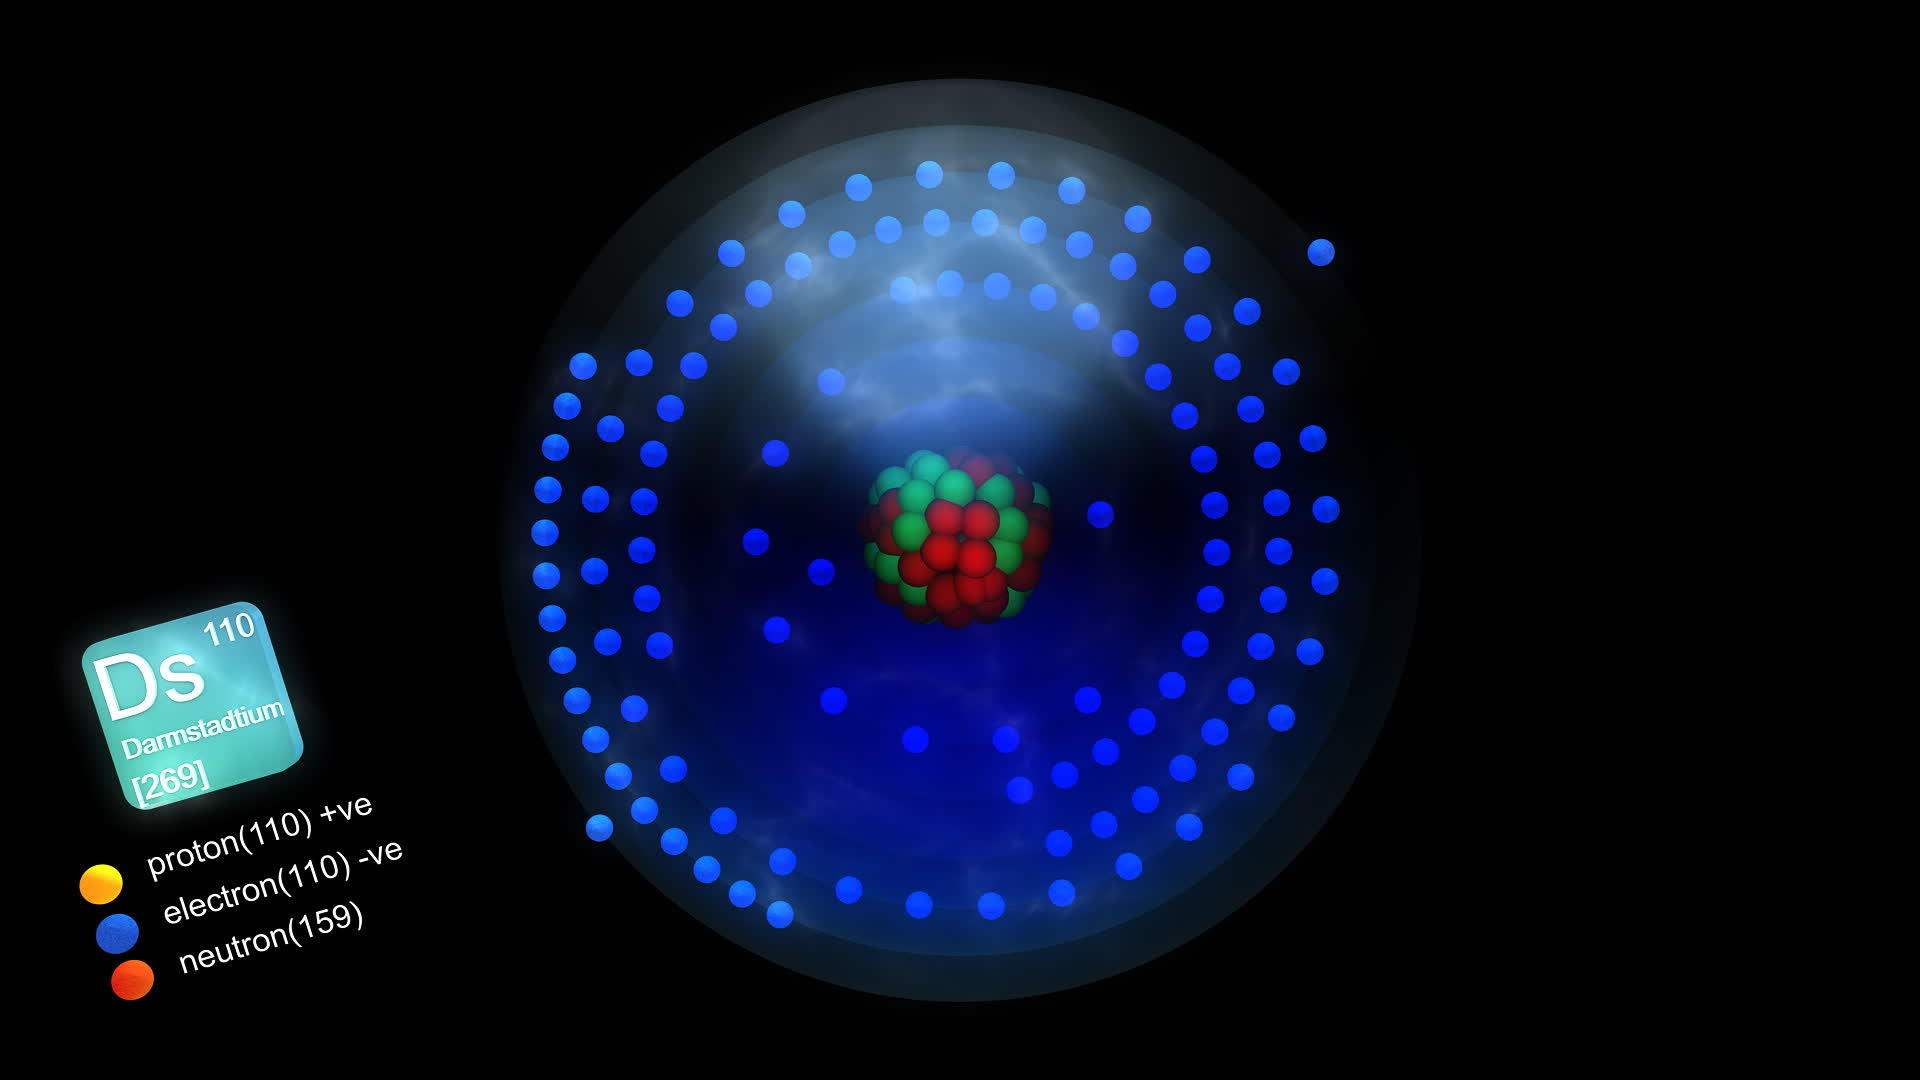 darmstadium元素符号的原子数量和质量视频的预览图